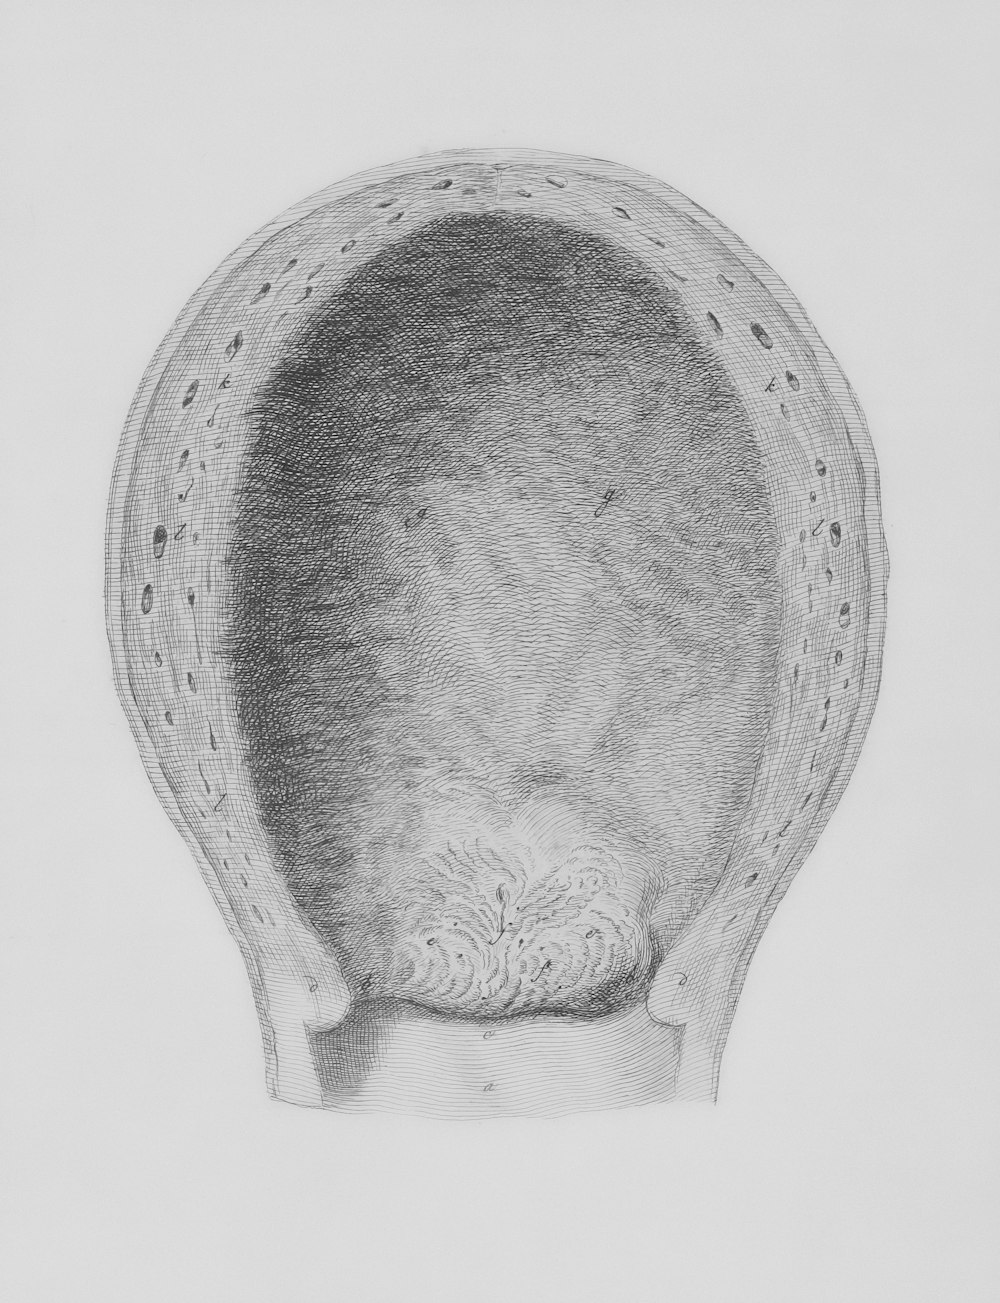 a pencil drawing of a human head